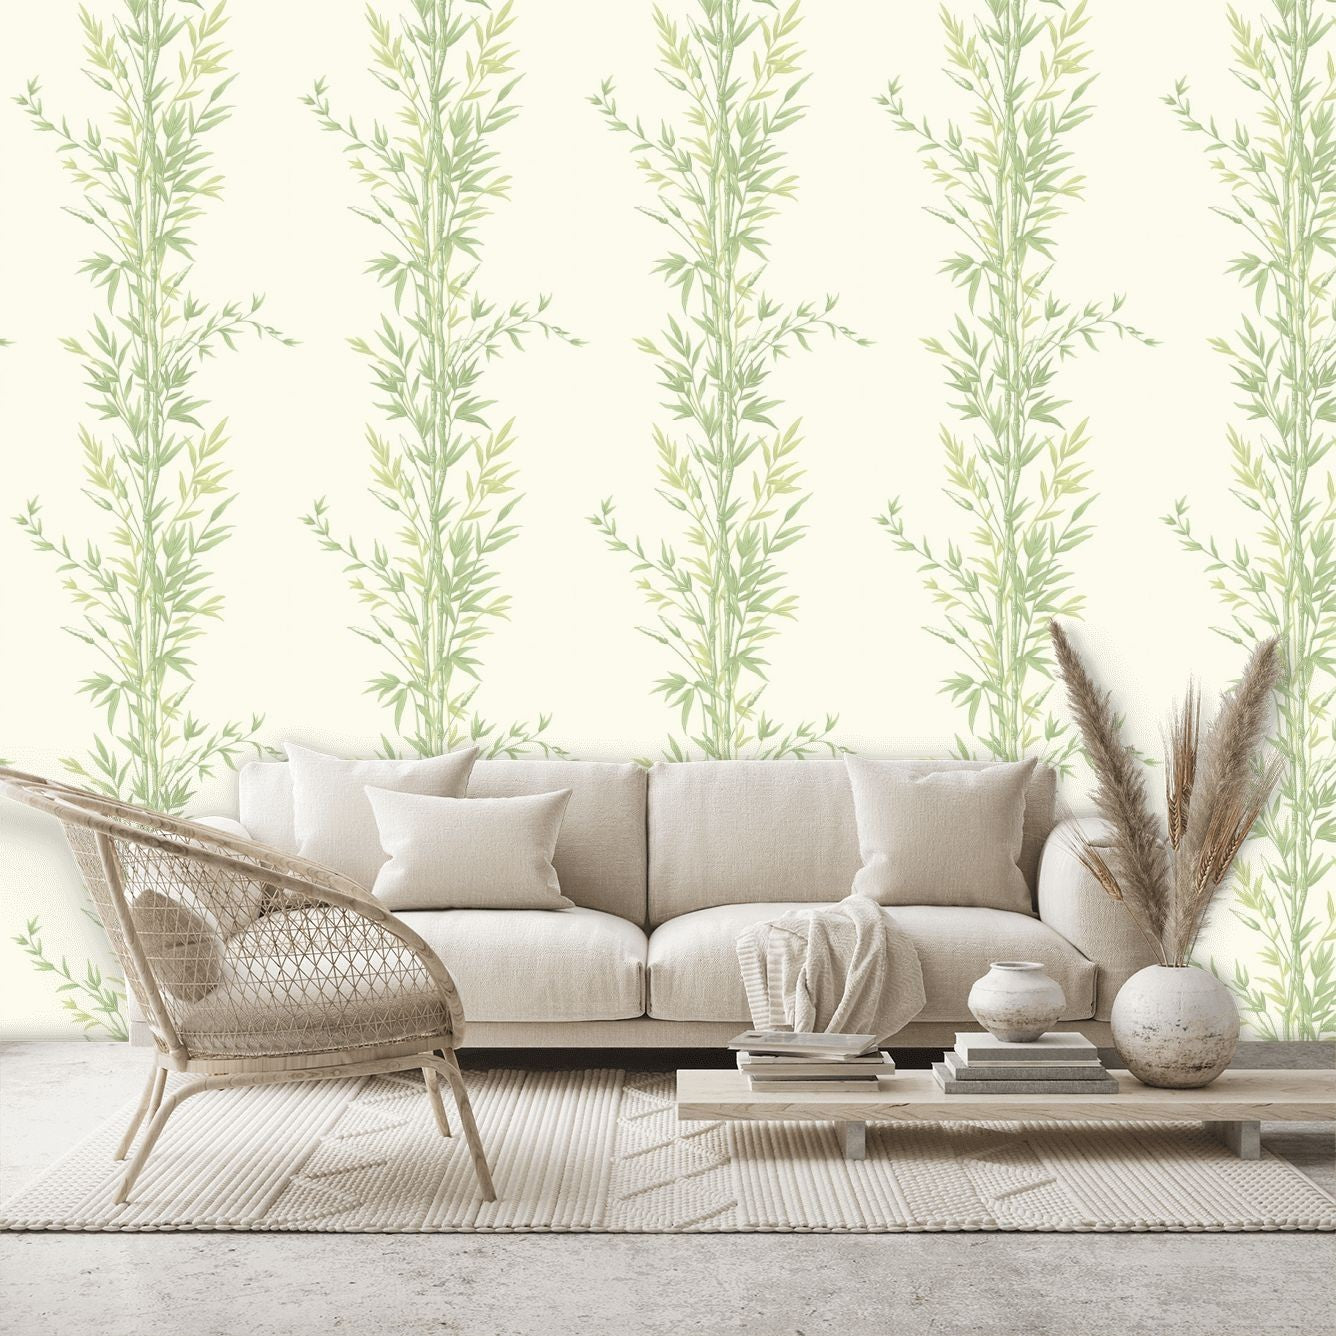 Tapeta ARCHIVE ANTHOLOGY - Bamboo zielony na bieli Cole & Son    Eye on Design